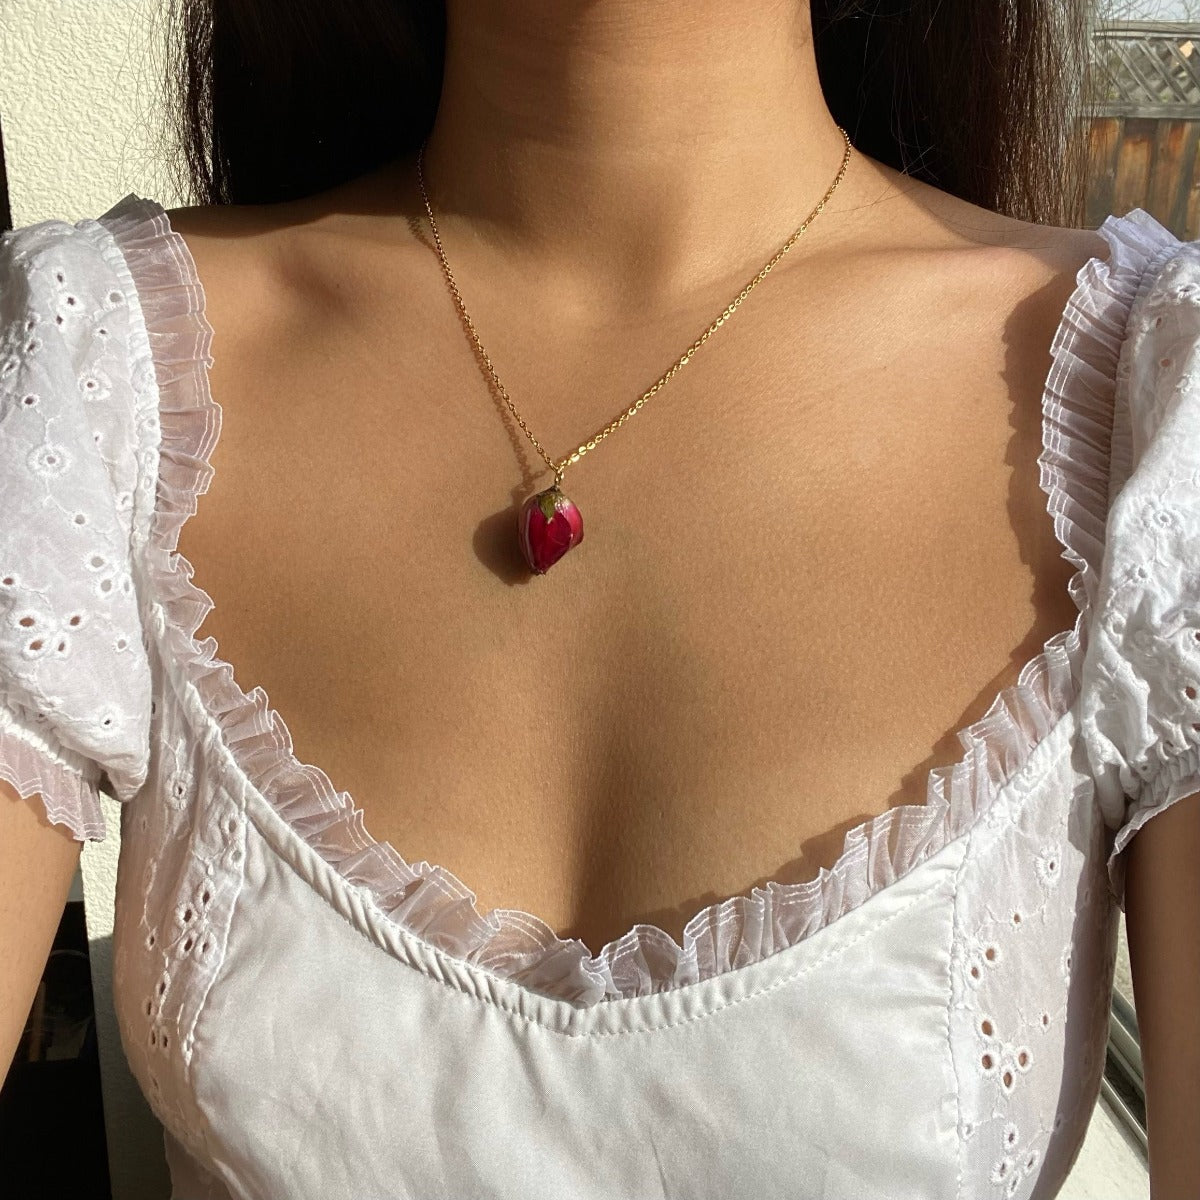 jacque - rosebud necklace